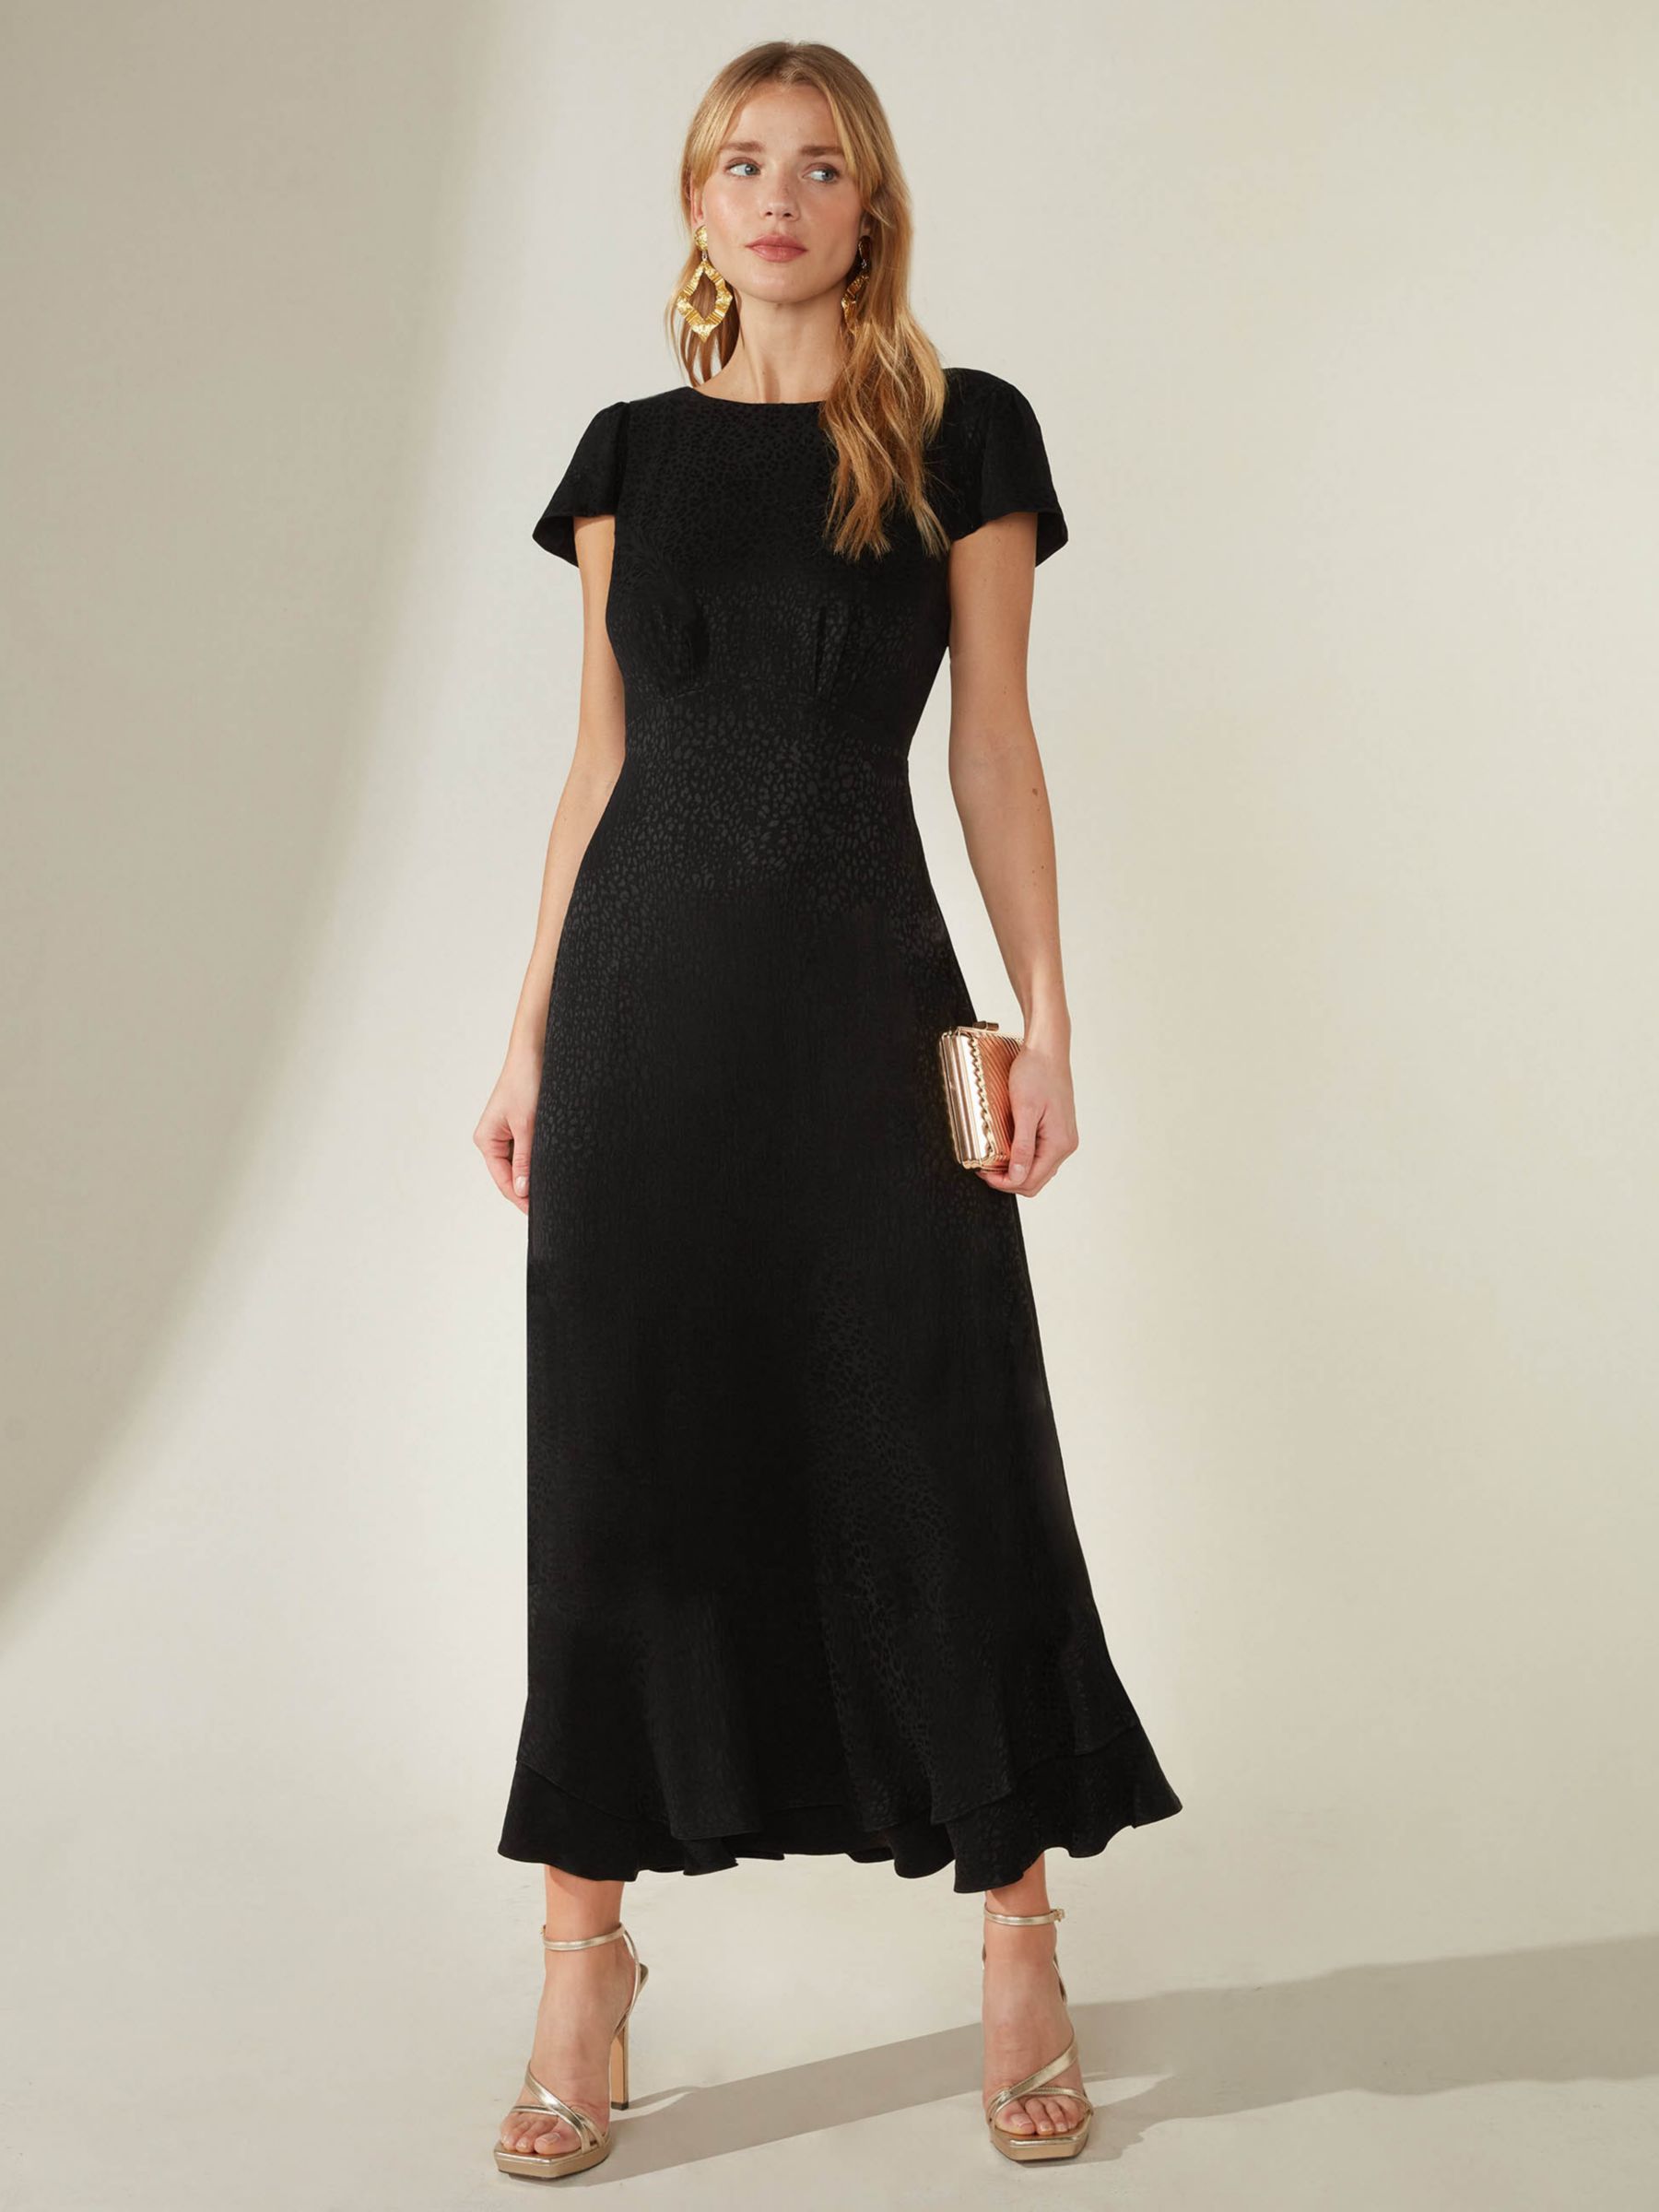 Ro&Zo Phoebe Scoop Back Dress, Black at John Lewis & Partners